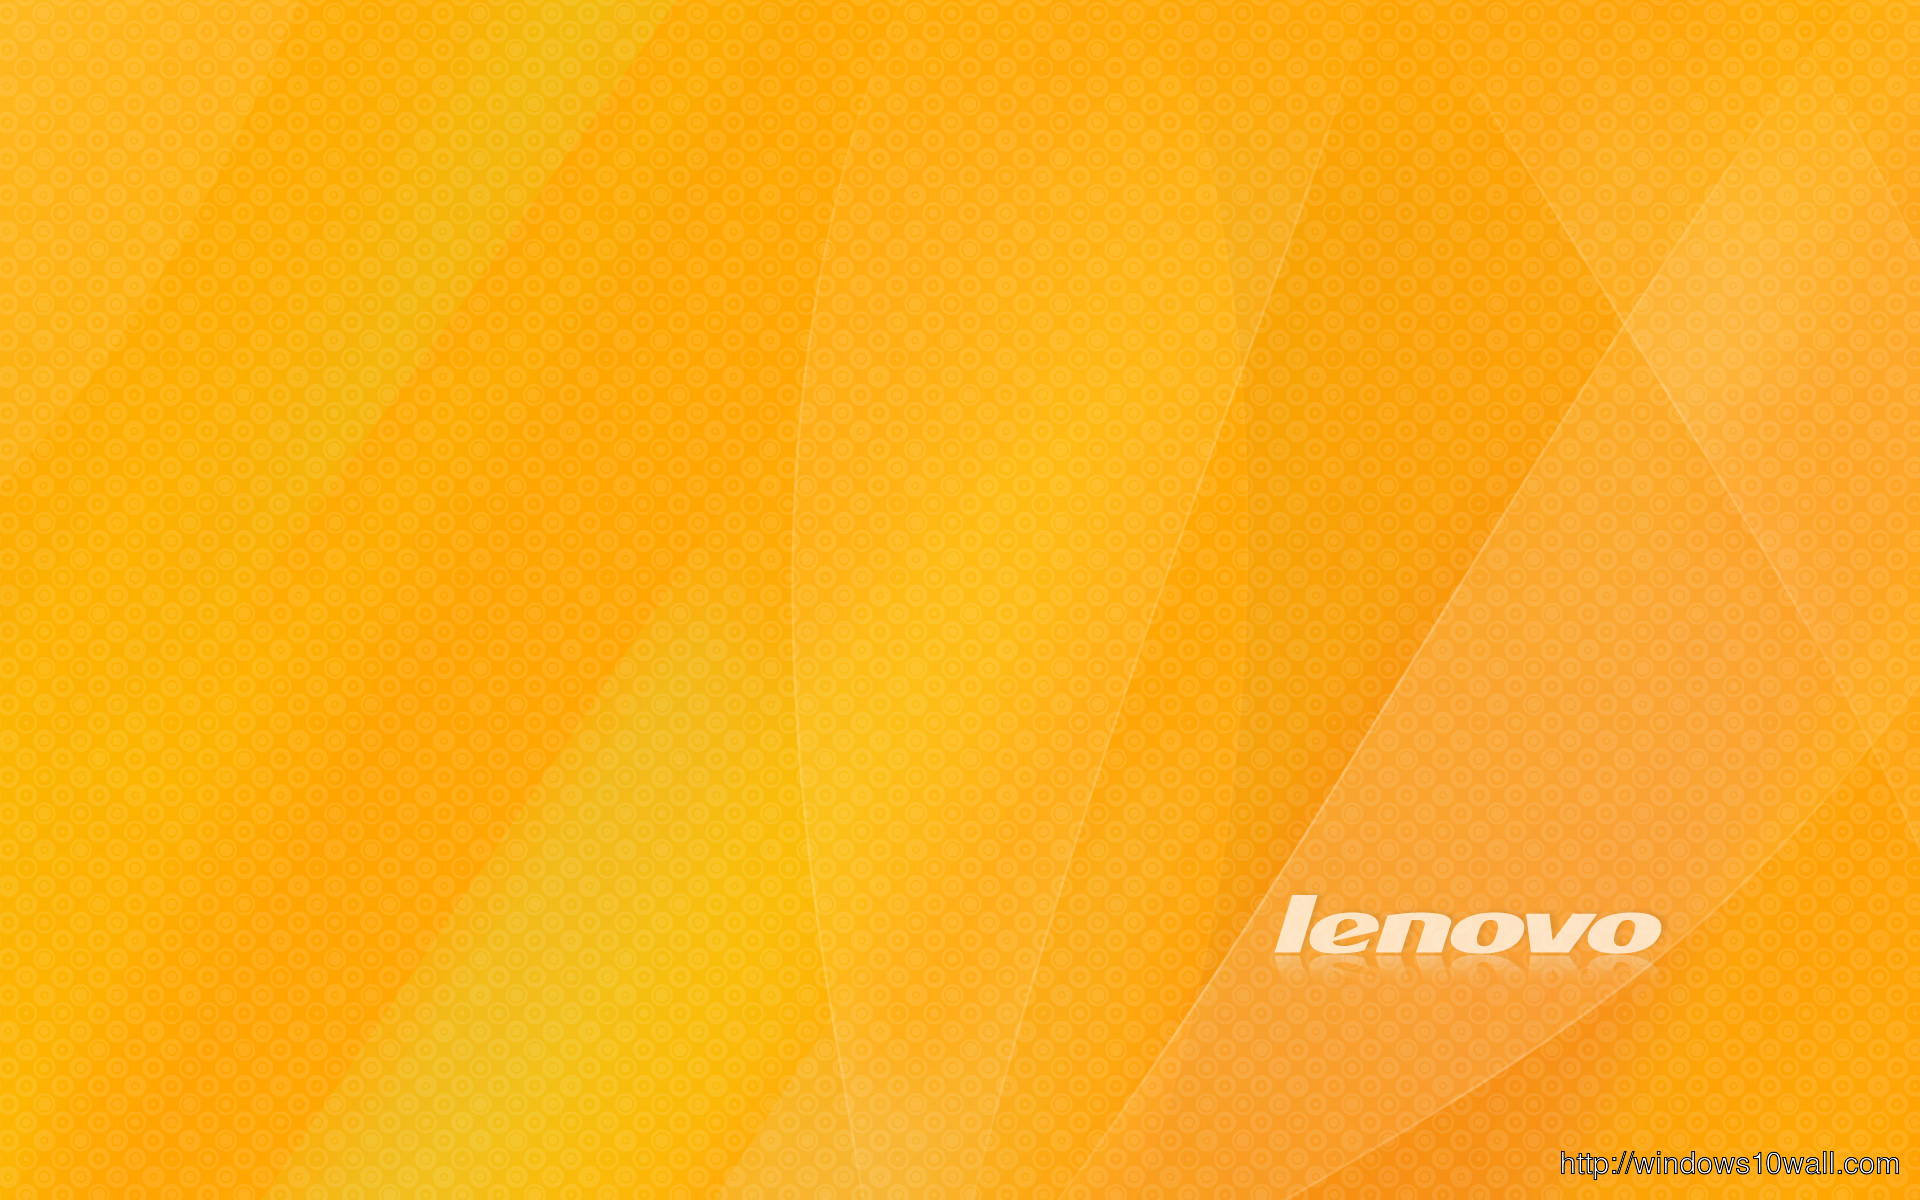 Yellow Windows 7 Style Lenovo Background Wallpaper